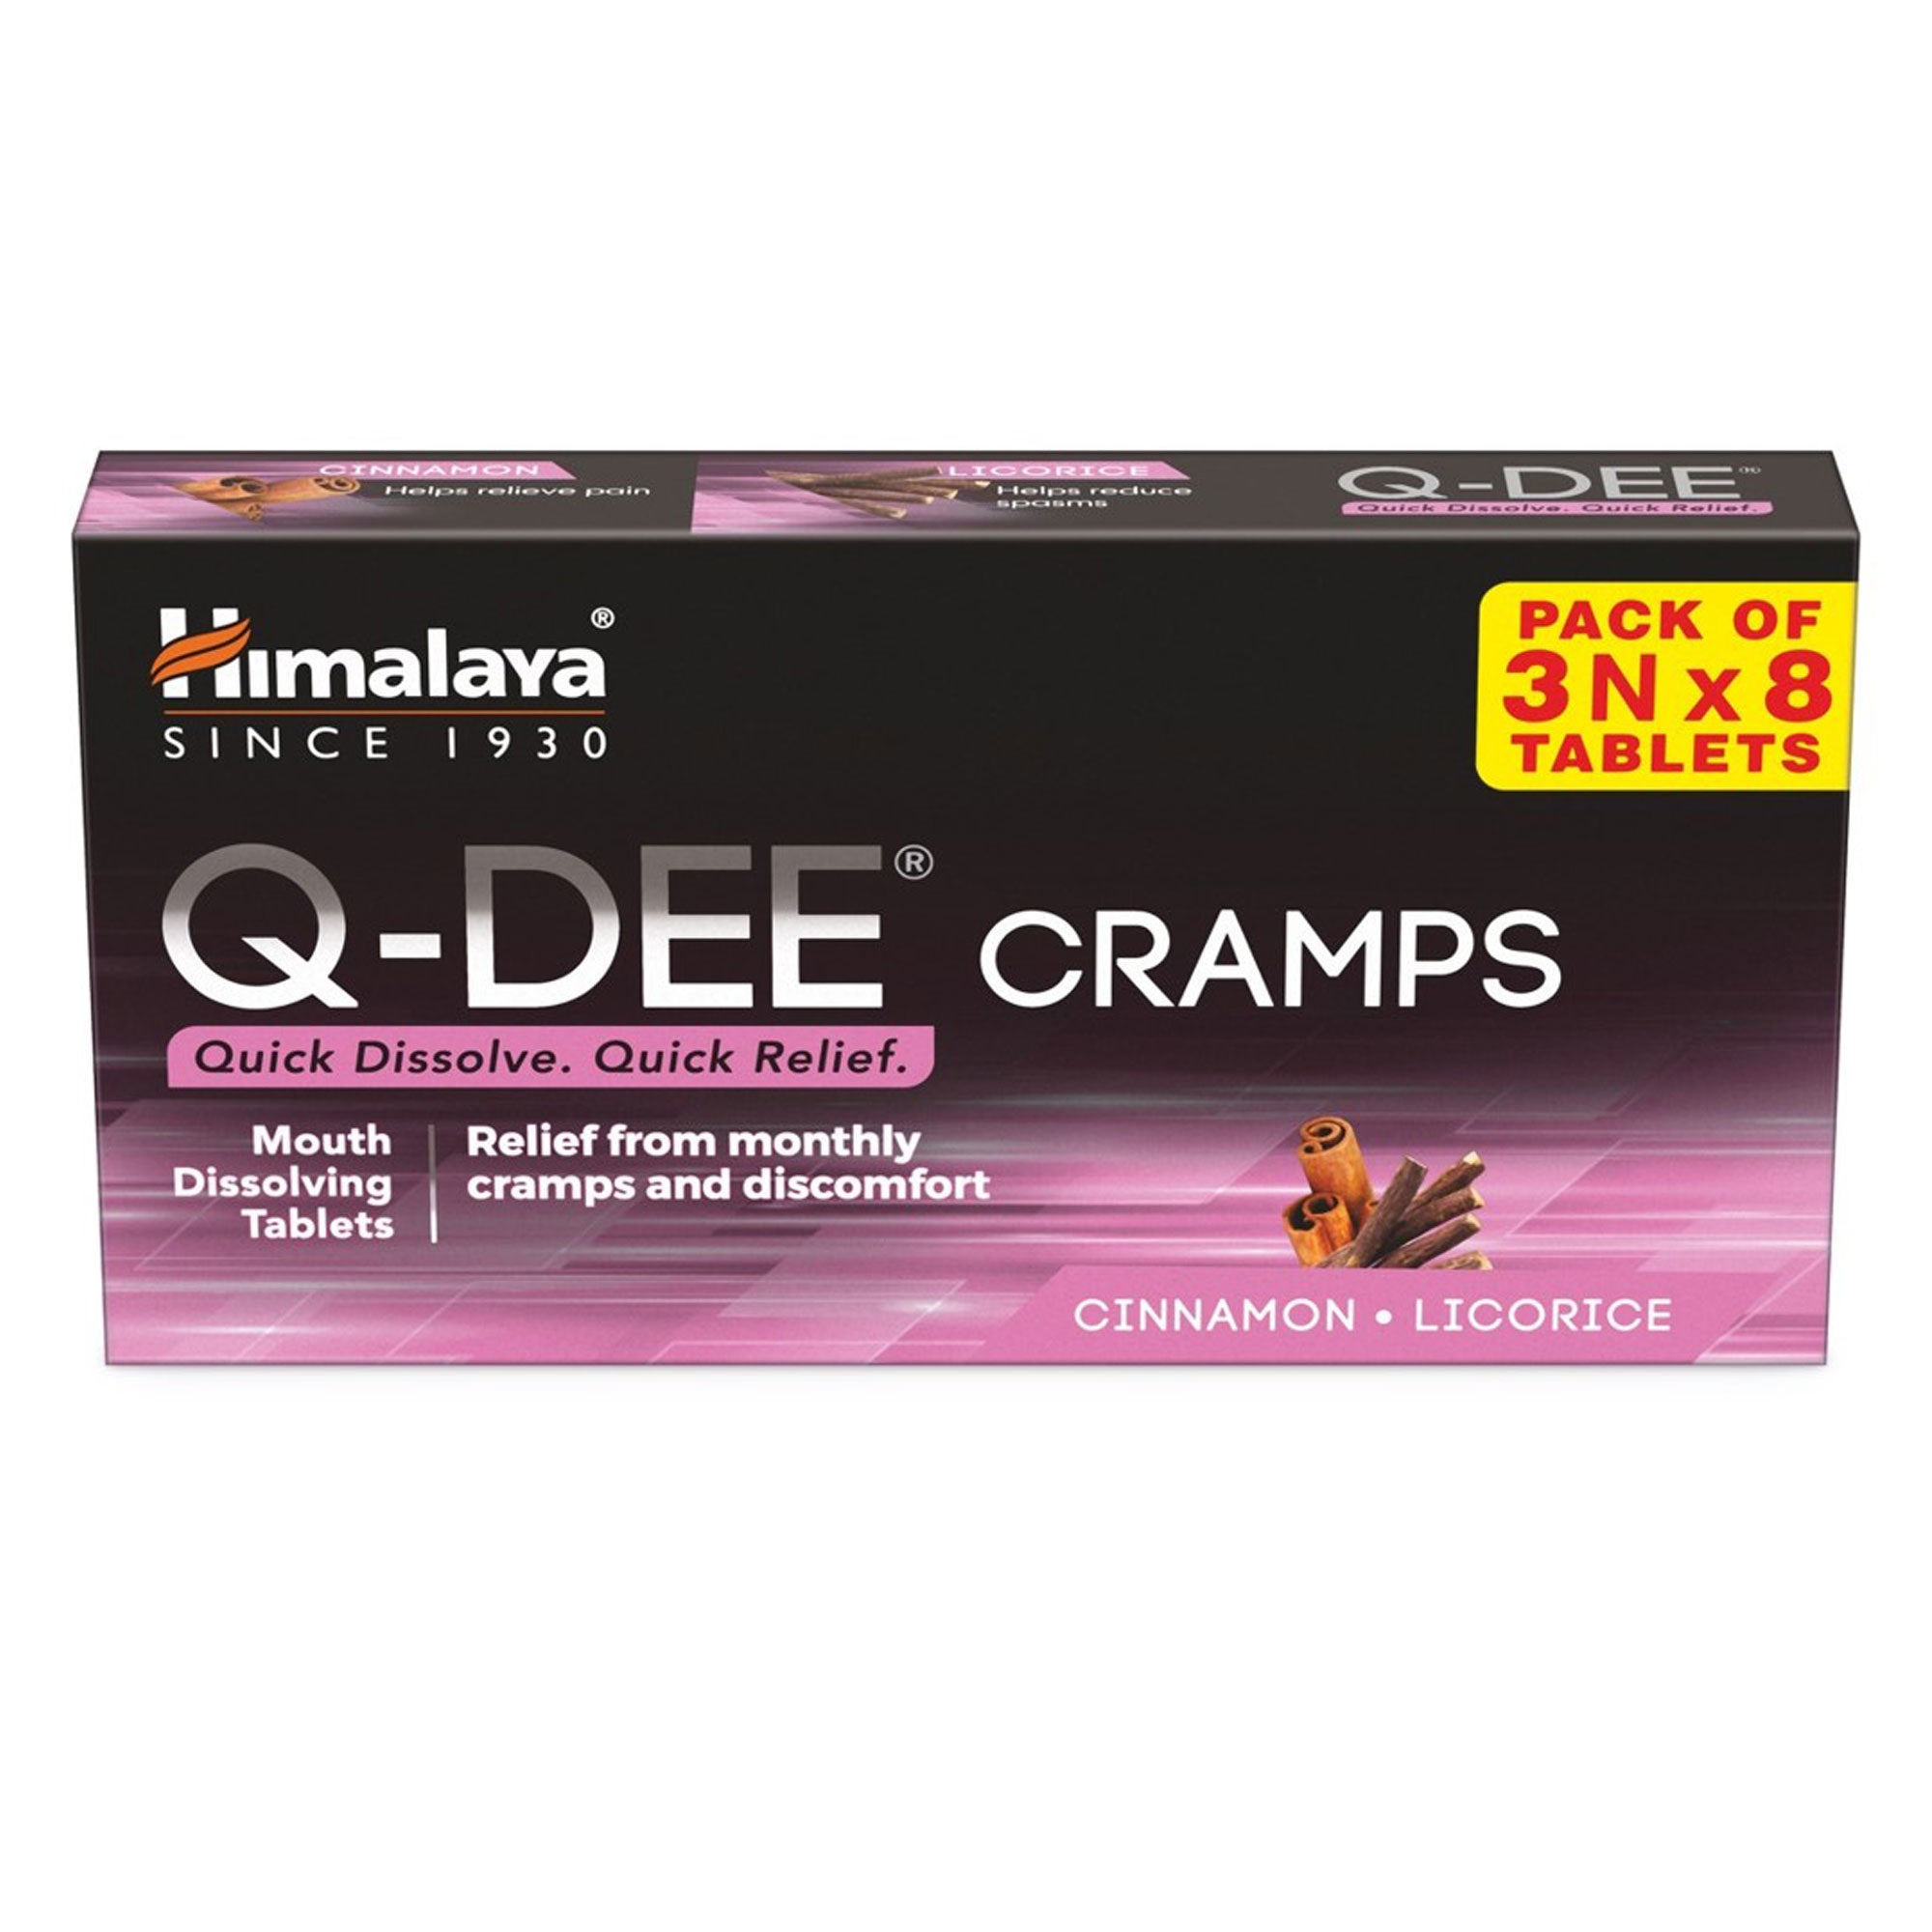 Himalaya Q-DEE Cramps Tablets - 3Nx8